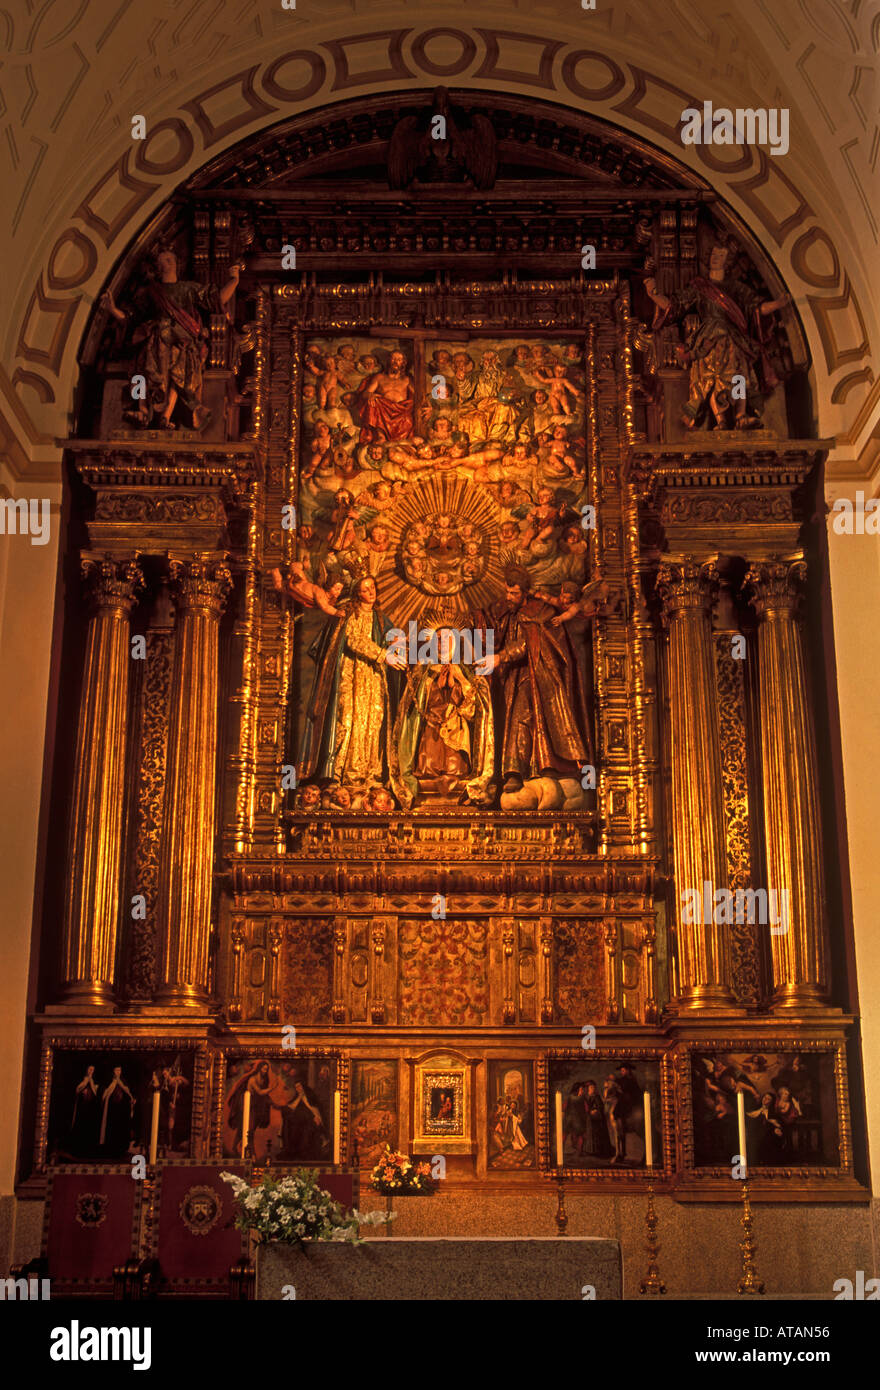 main altar, Convent of Santa Teresa, Convento de Santa Teresa, city of Avila, Avila Province, Castile and Leon, Spain, Europe Stock Photo